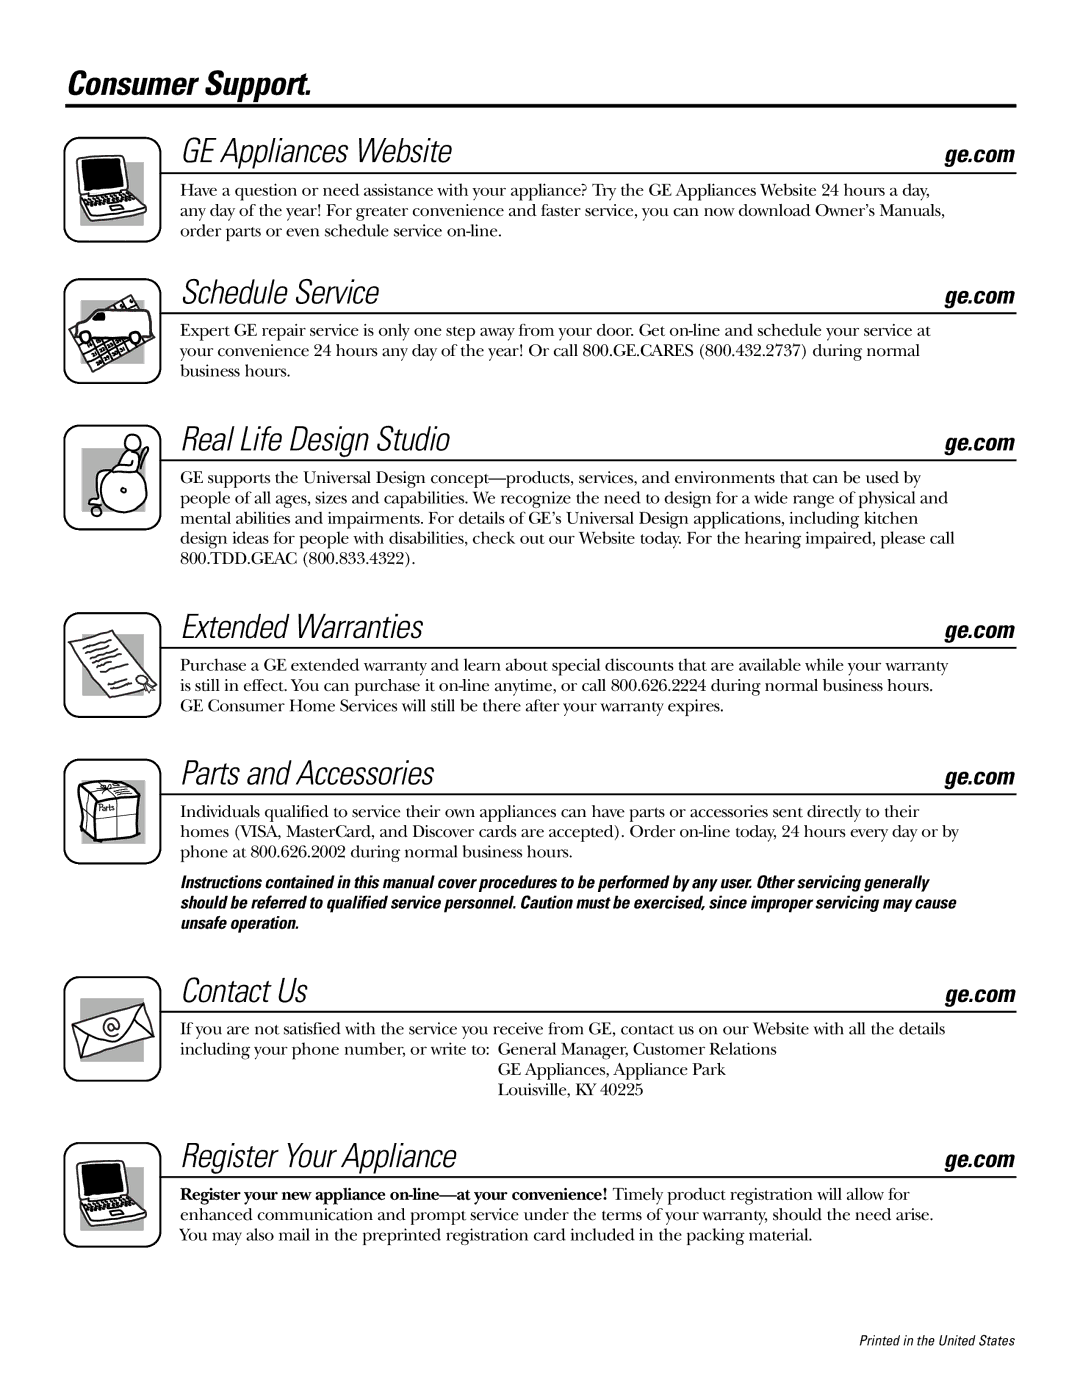 GE PK91627 manual Consumer Support GE Appliances Website, Schedule Service, Real Life Design Studio, Extended Warranties 